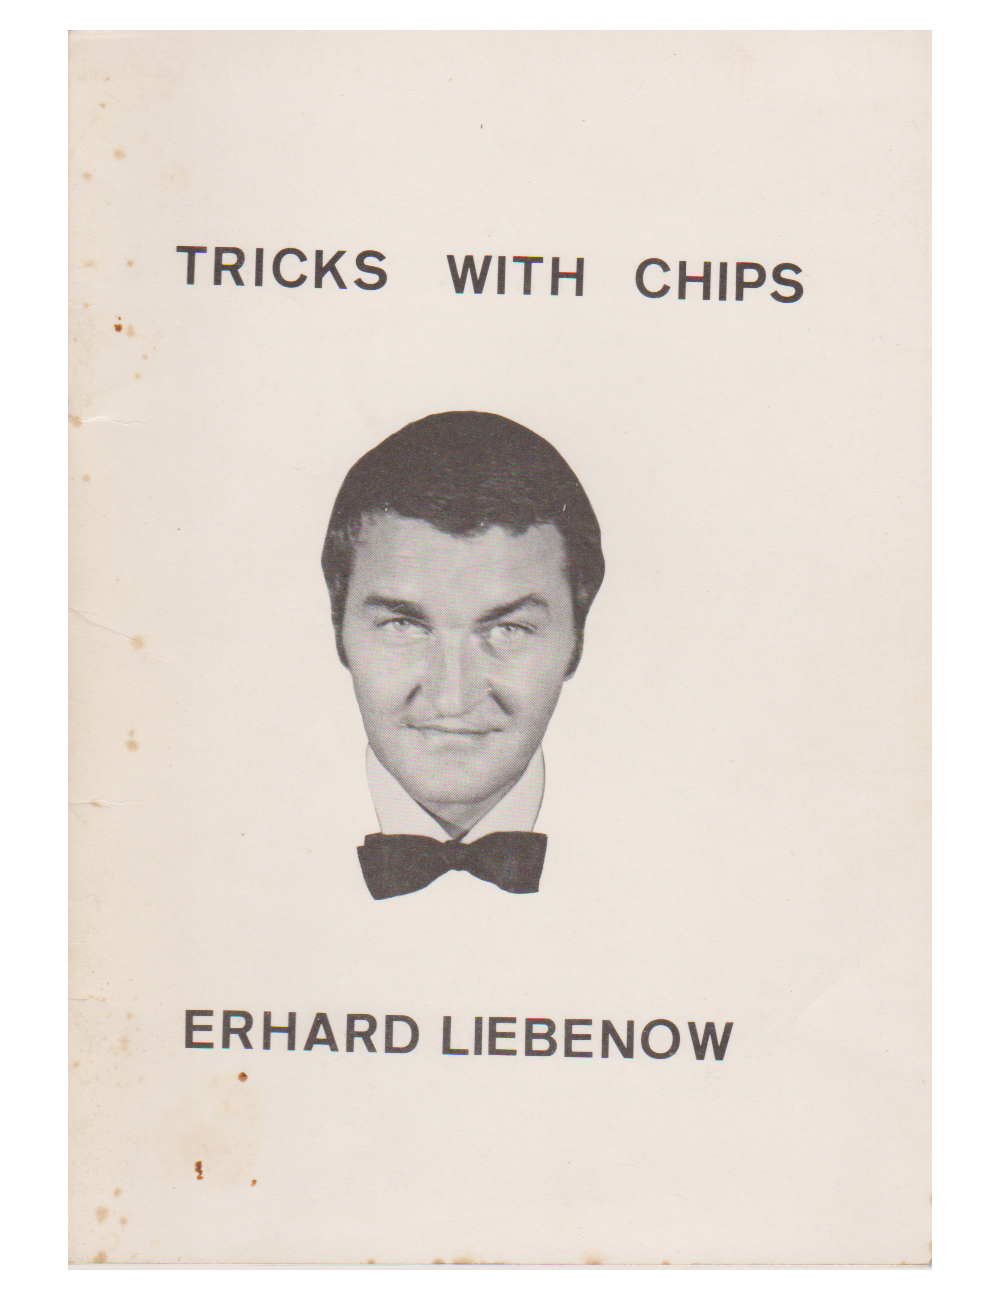 TRICKS WITH CHIPS (ERHARD LIEBENOW)